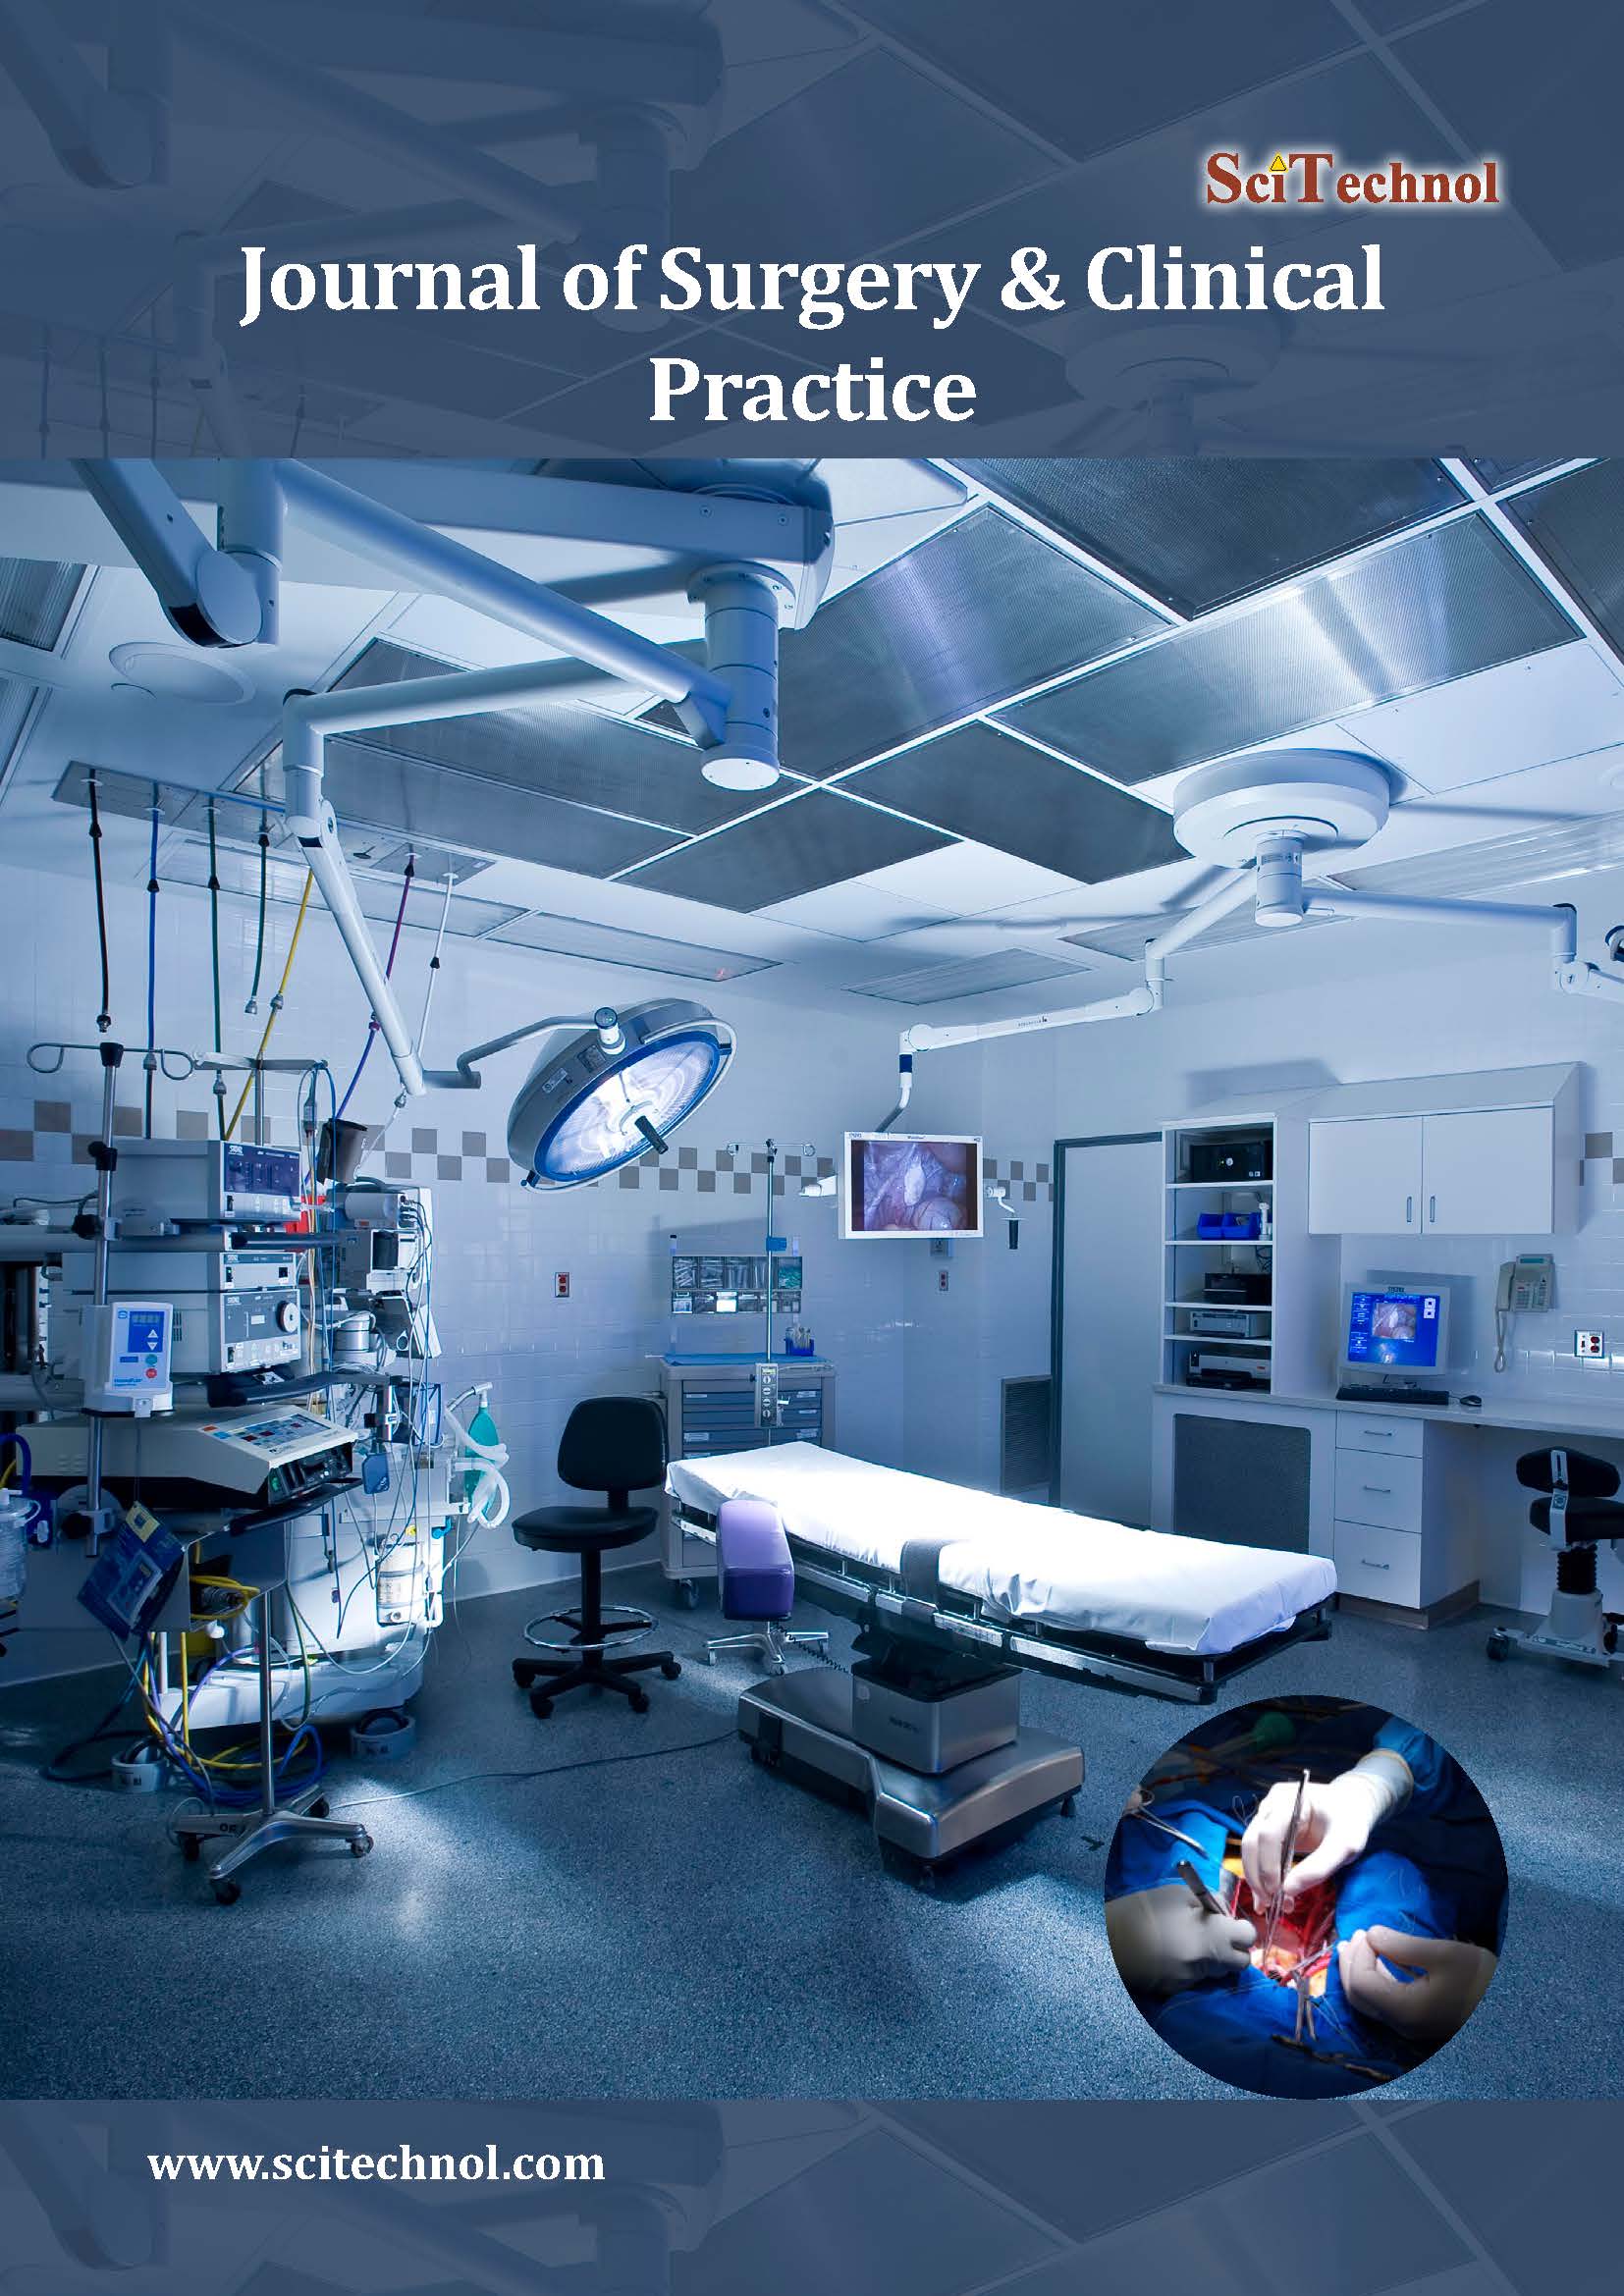 Journal-of-Surgery--Clinical-Practice-flyer.jpg